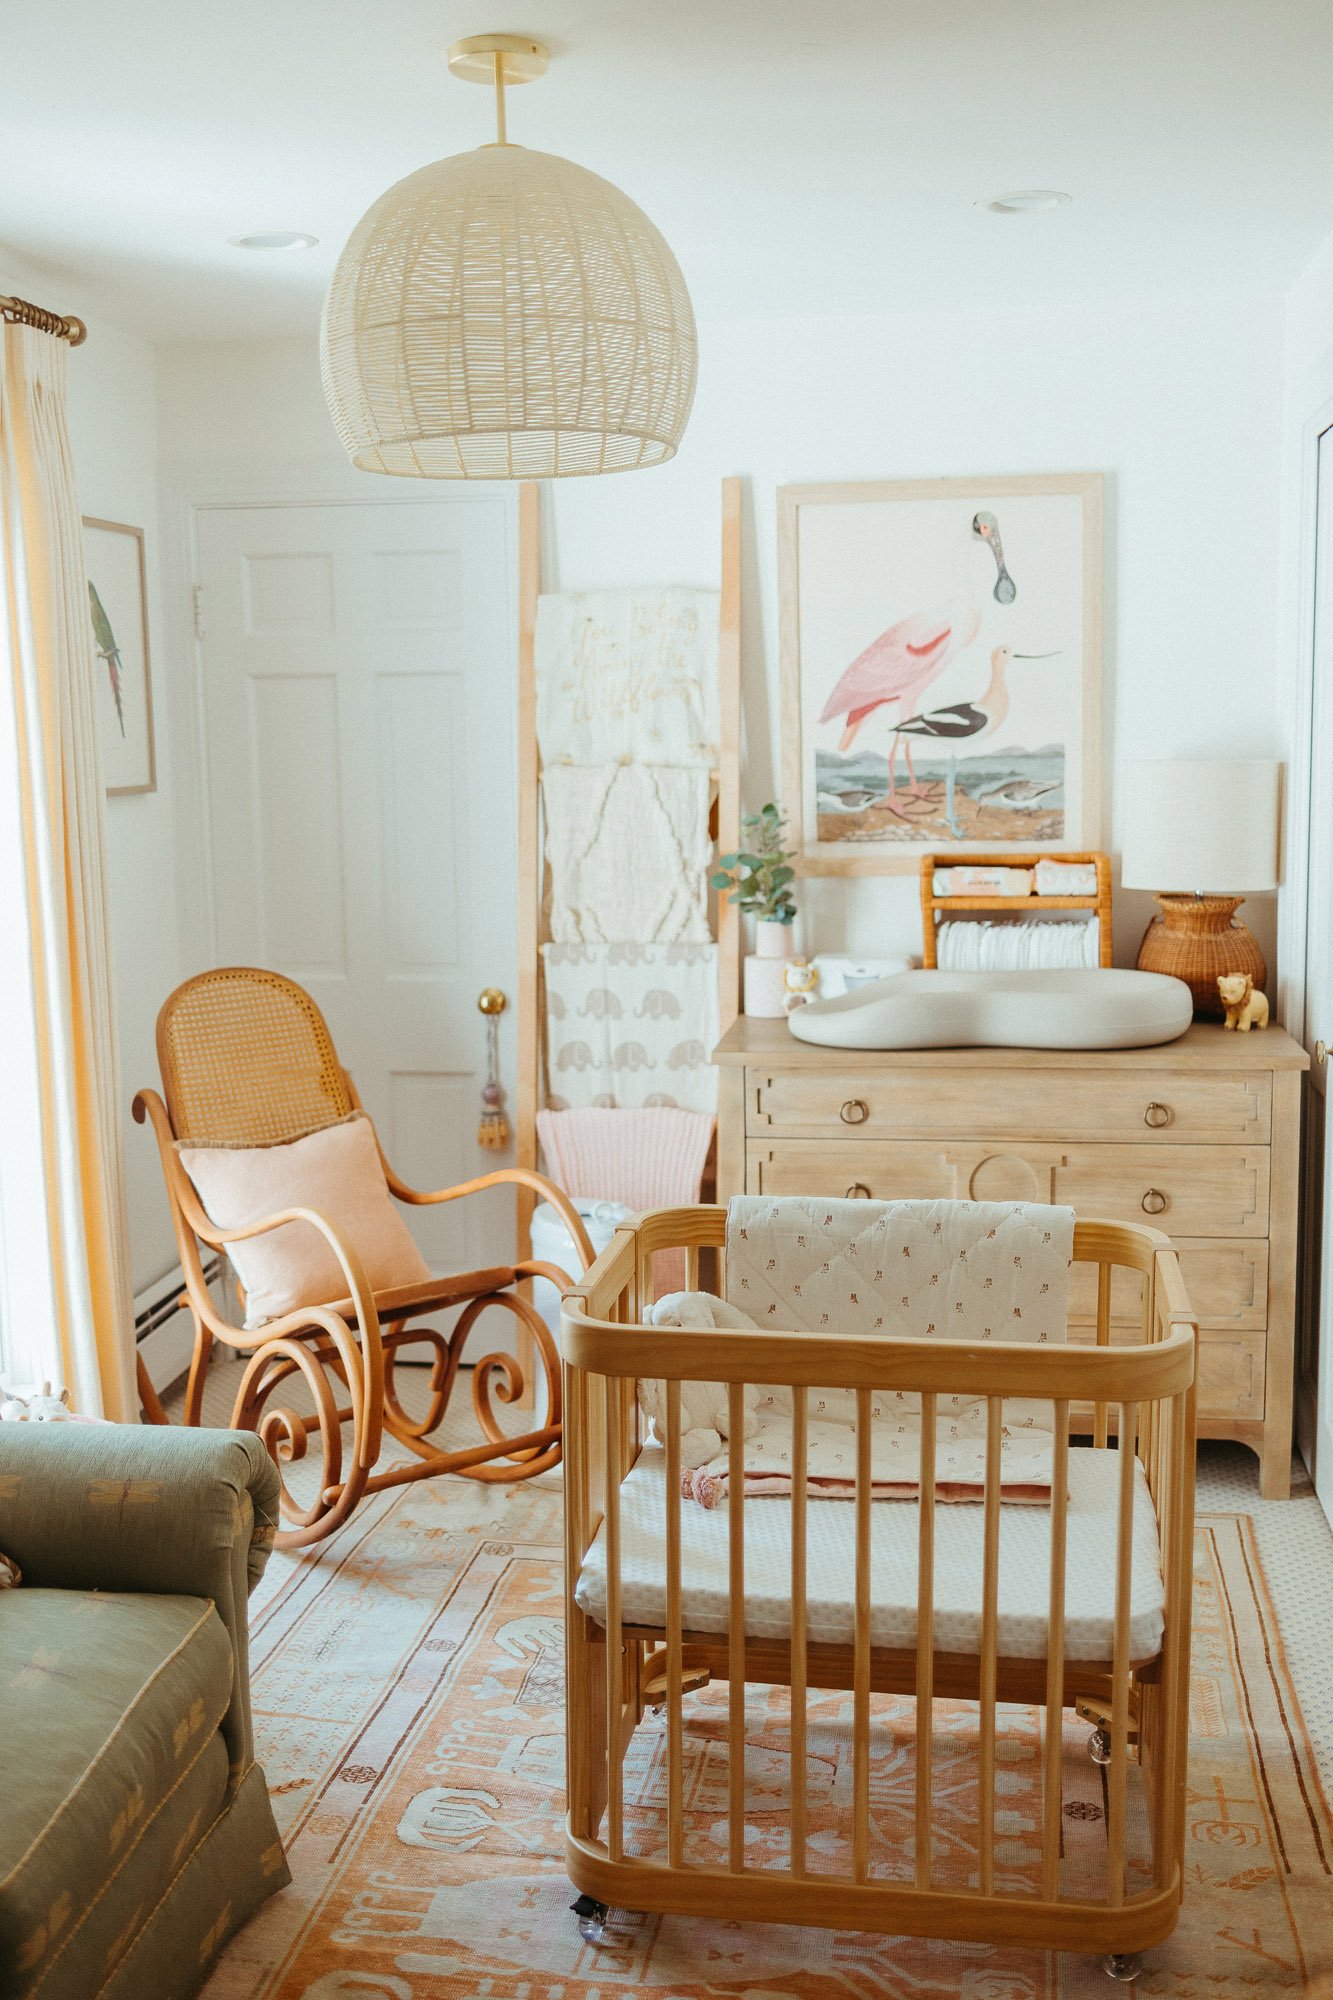 baby-nursey-wooden-rocking-chair-crib-green-couch-family-photographer-autumn-skye.jpg